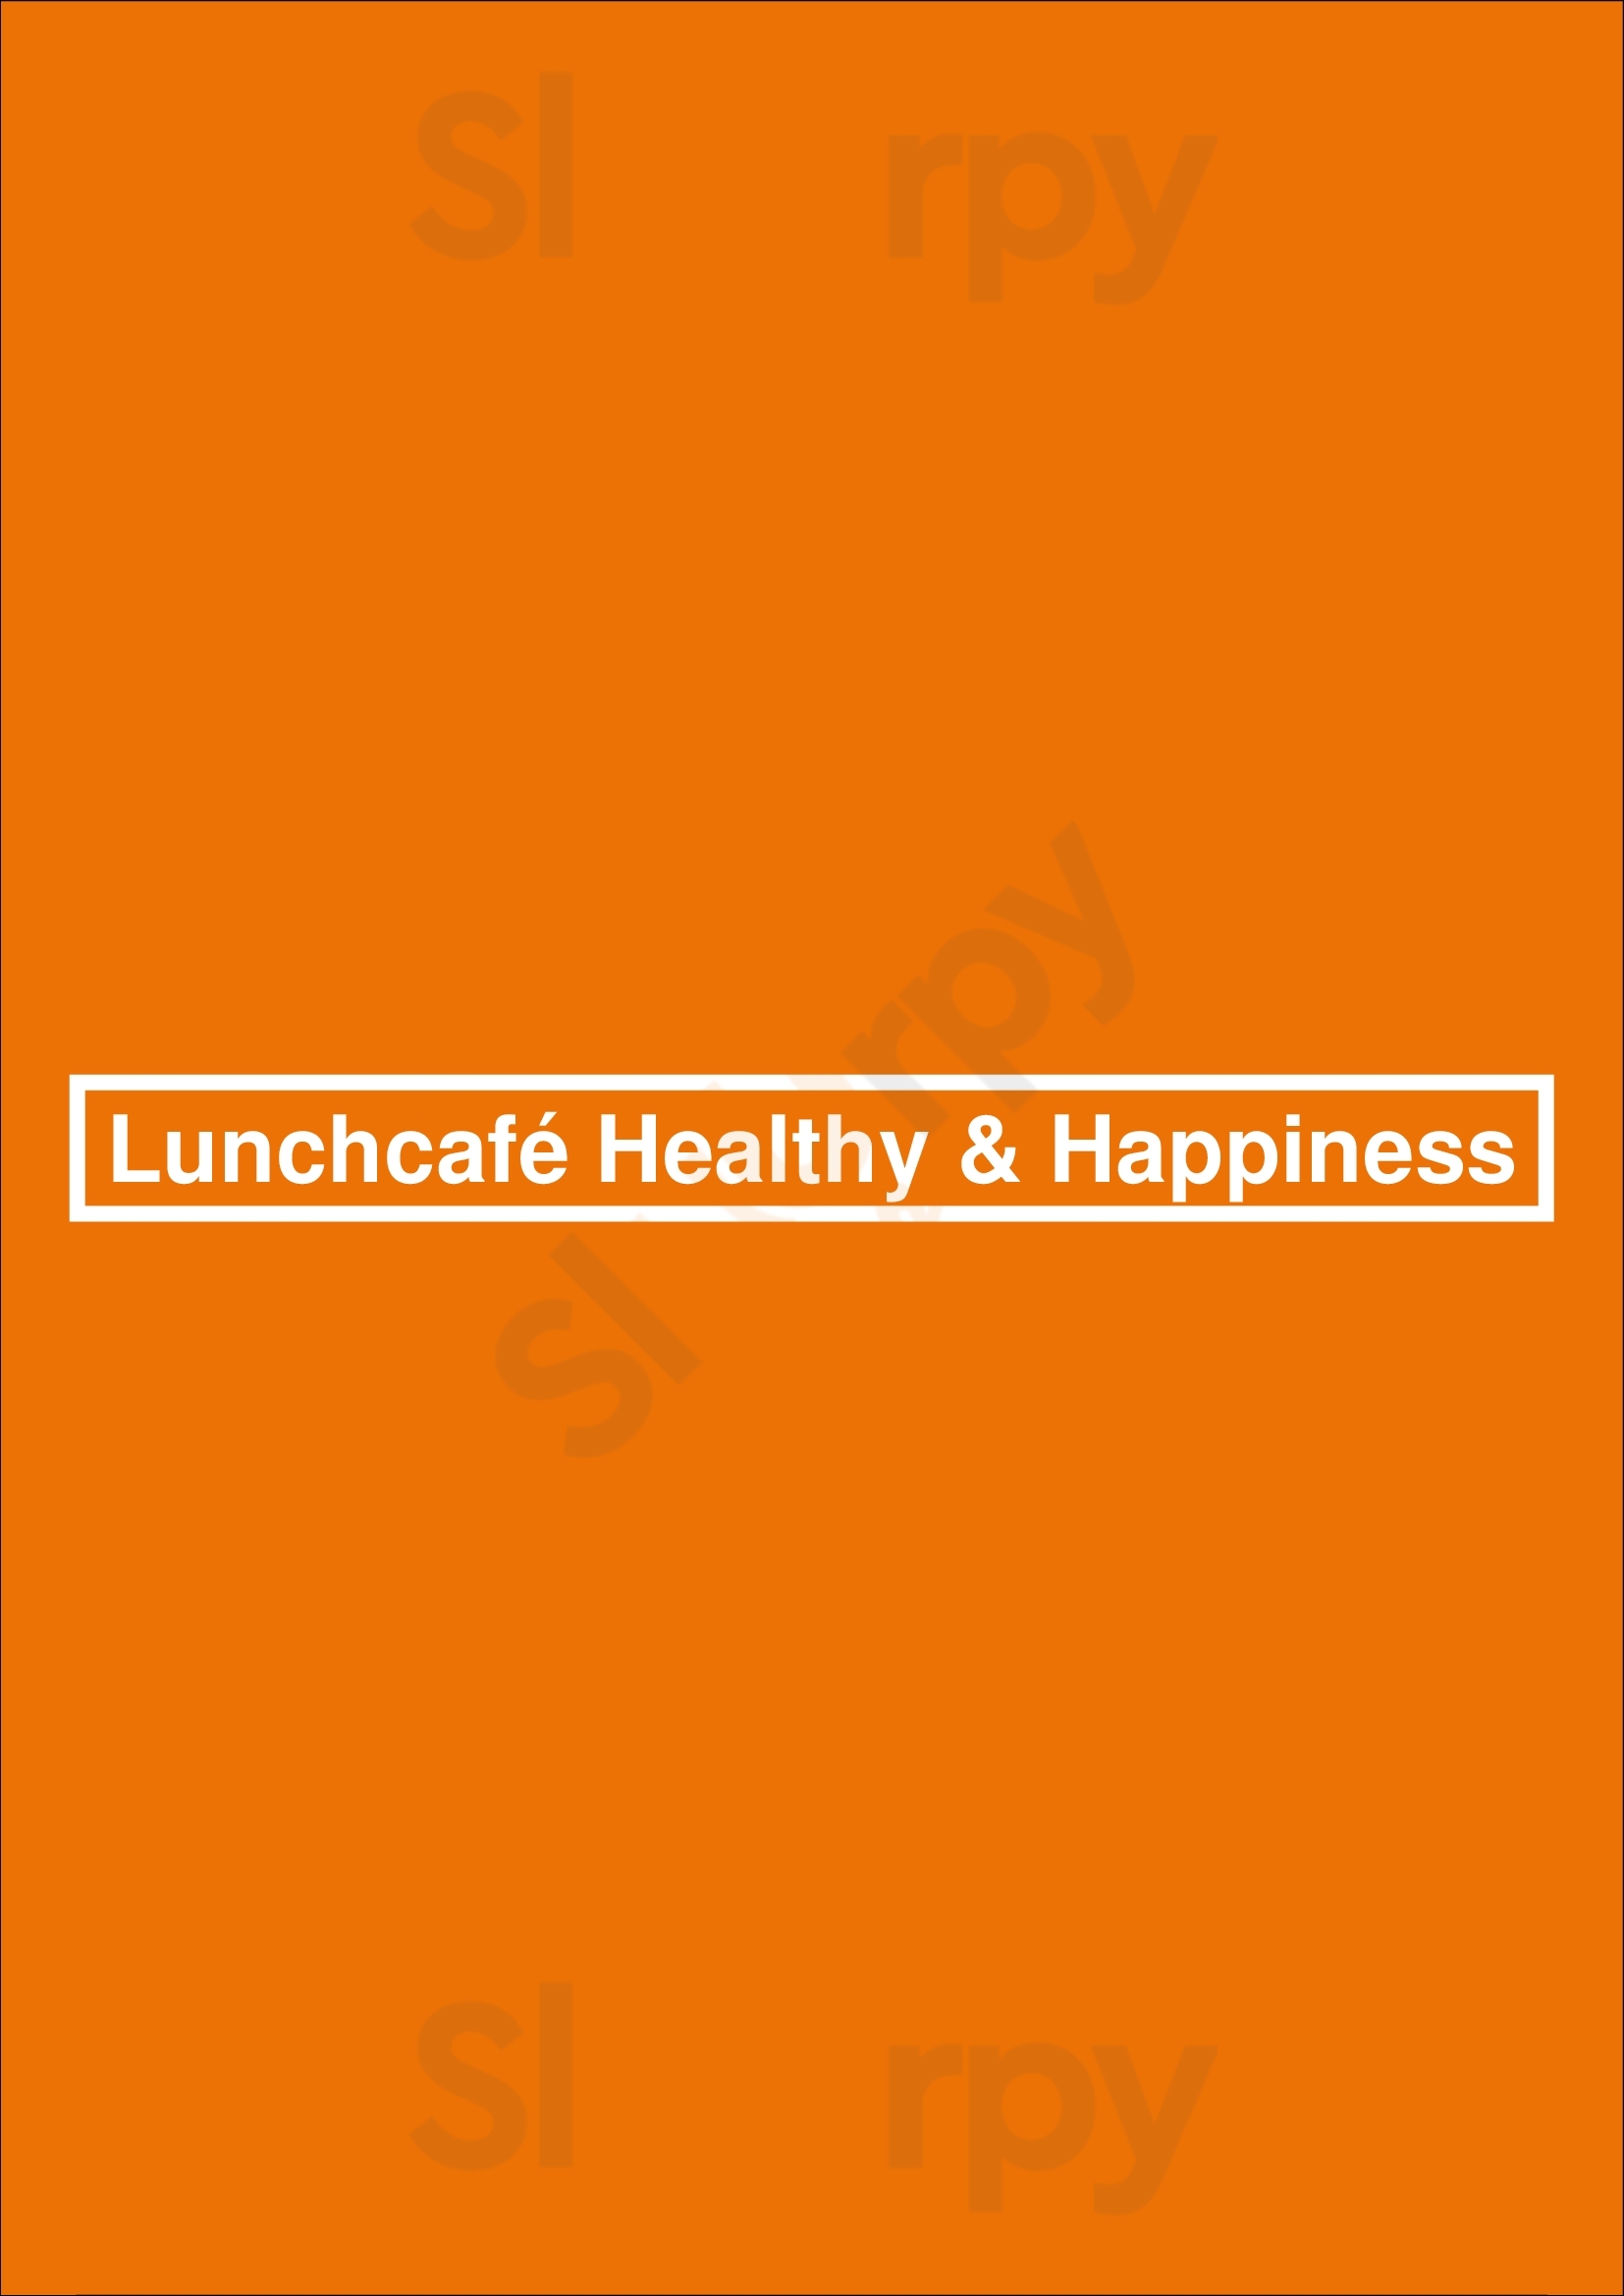 Lunchcafé Healthy & Happiness Delft Menu - 1